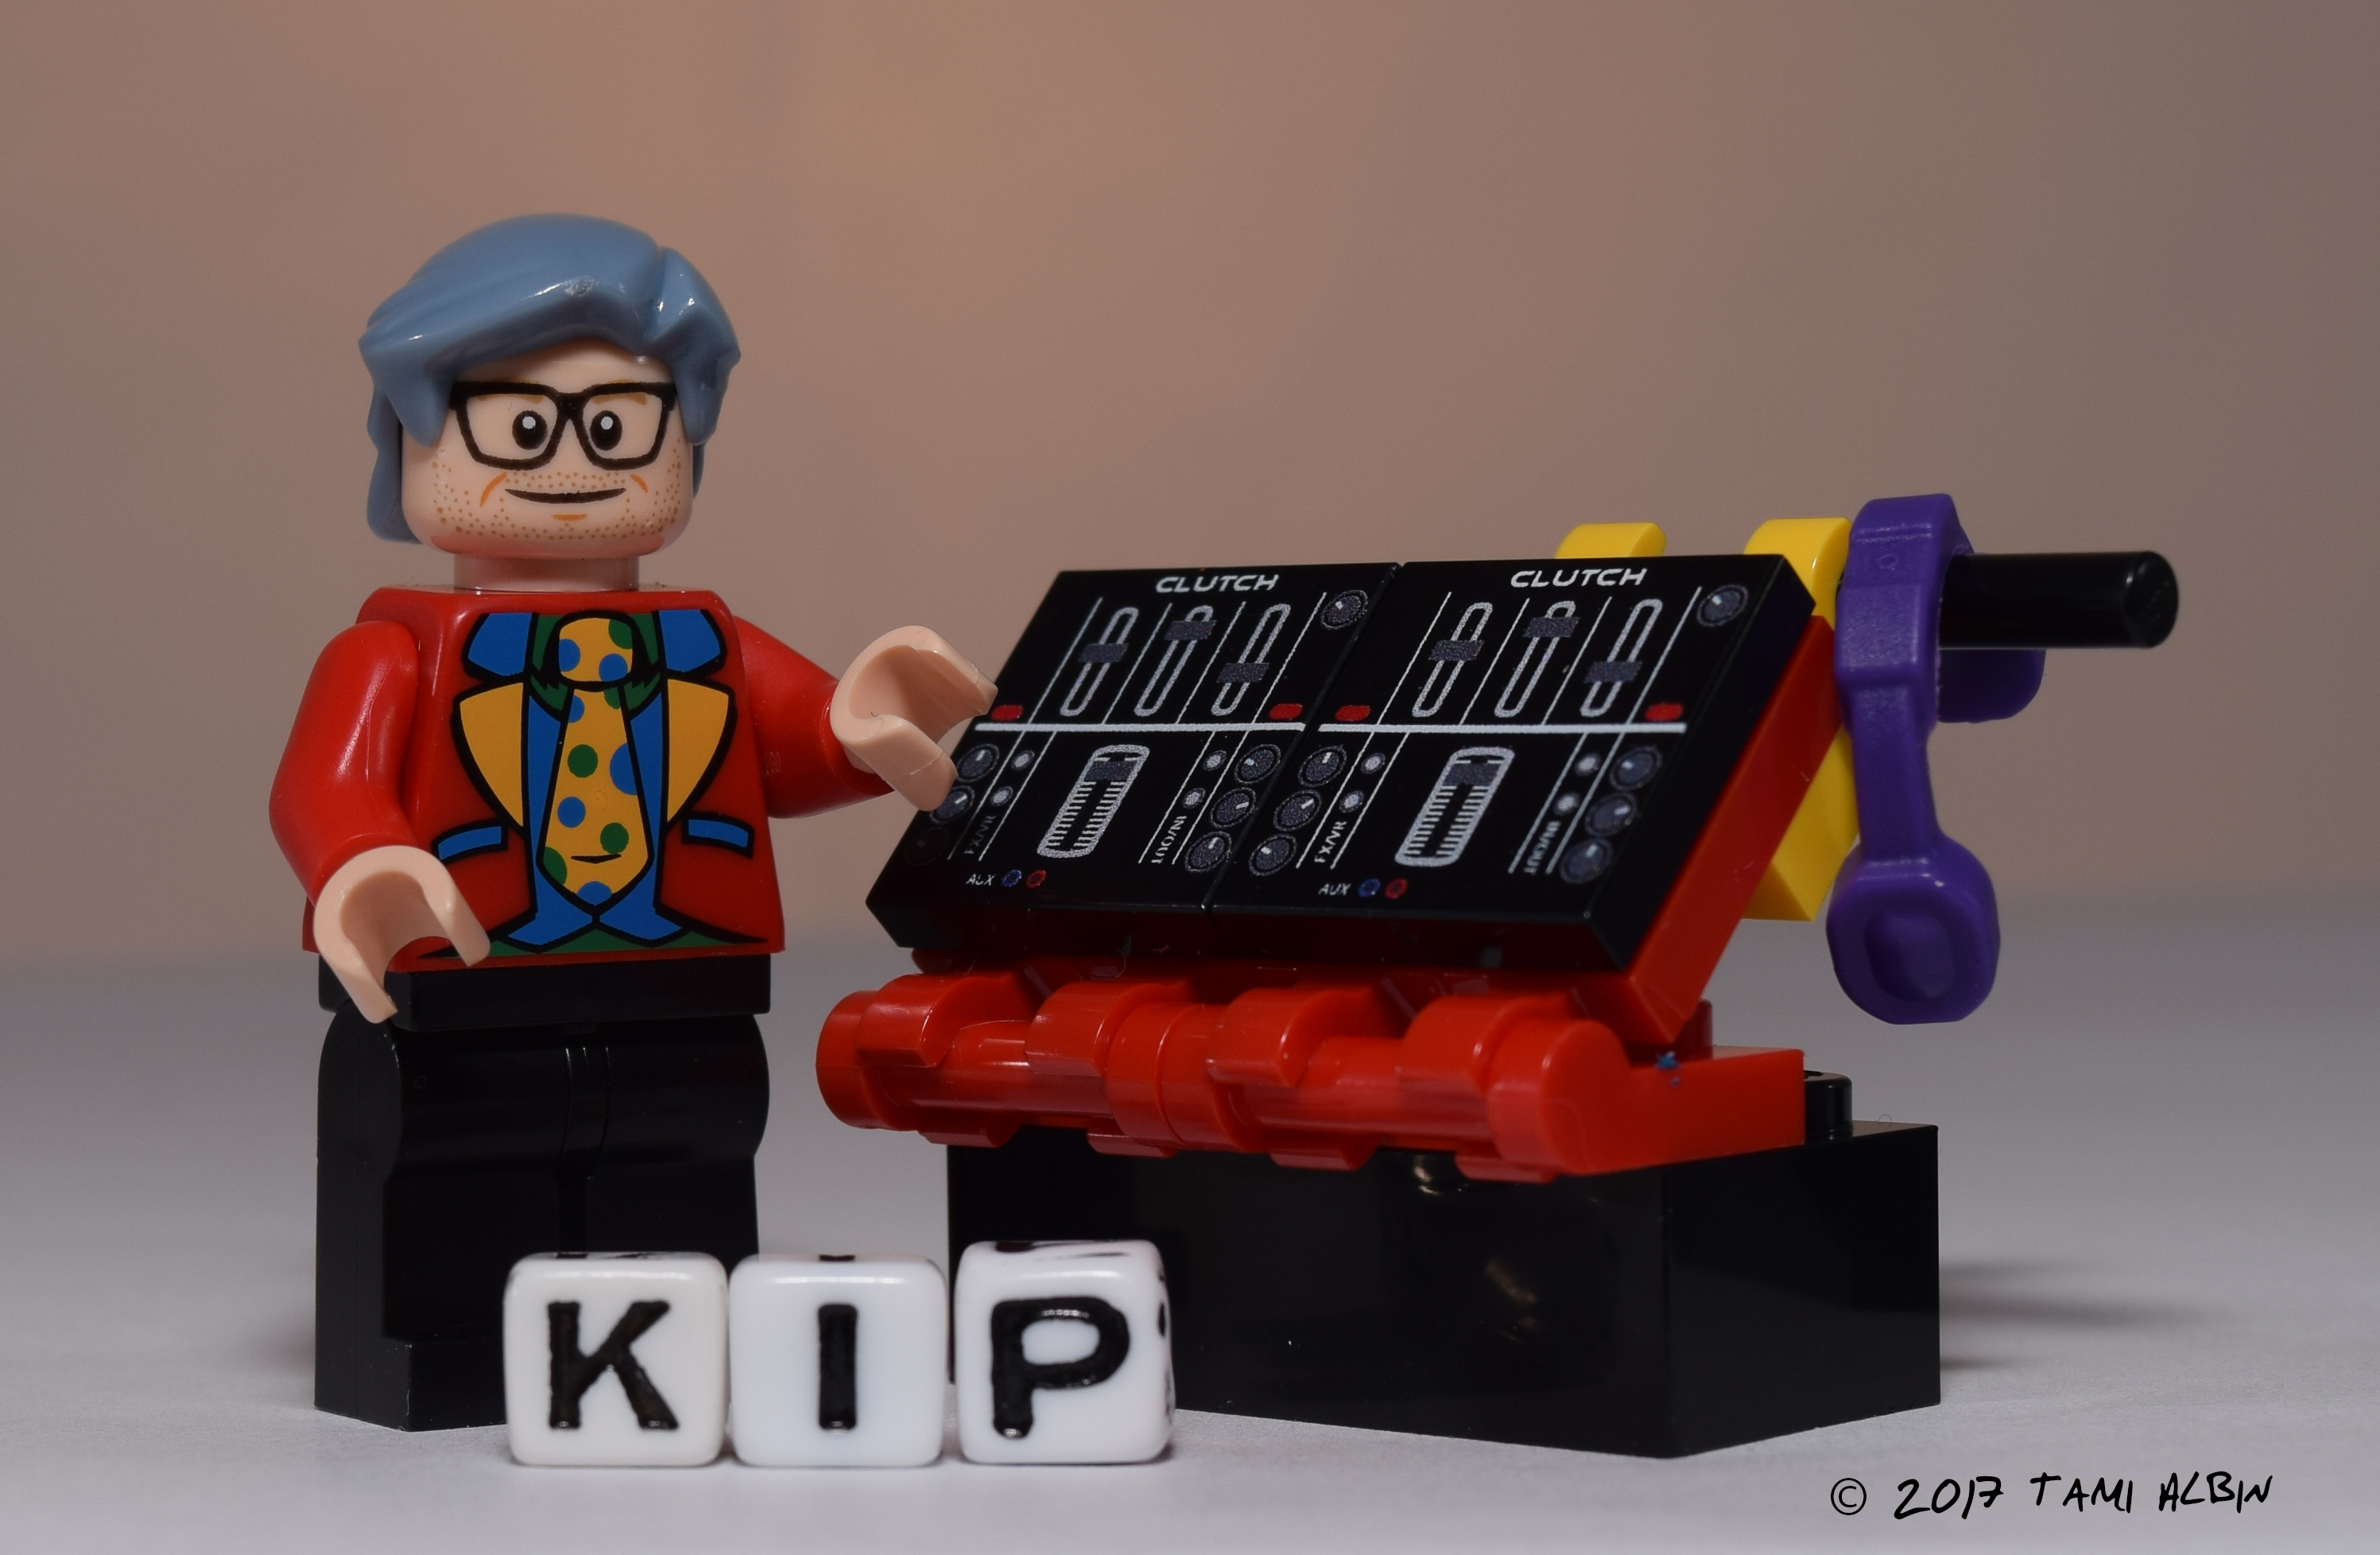 Lego Kip standing next to Lego AUMI